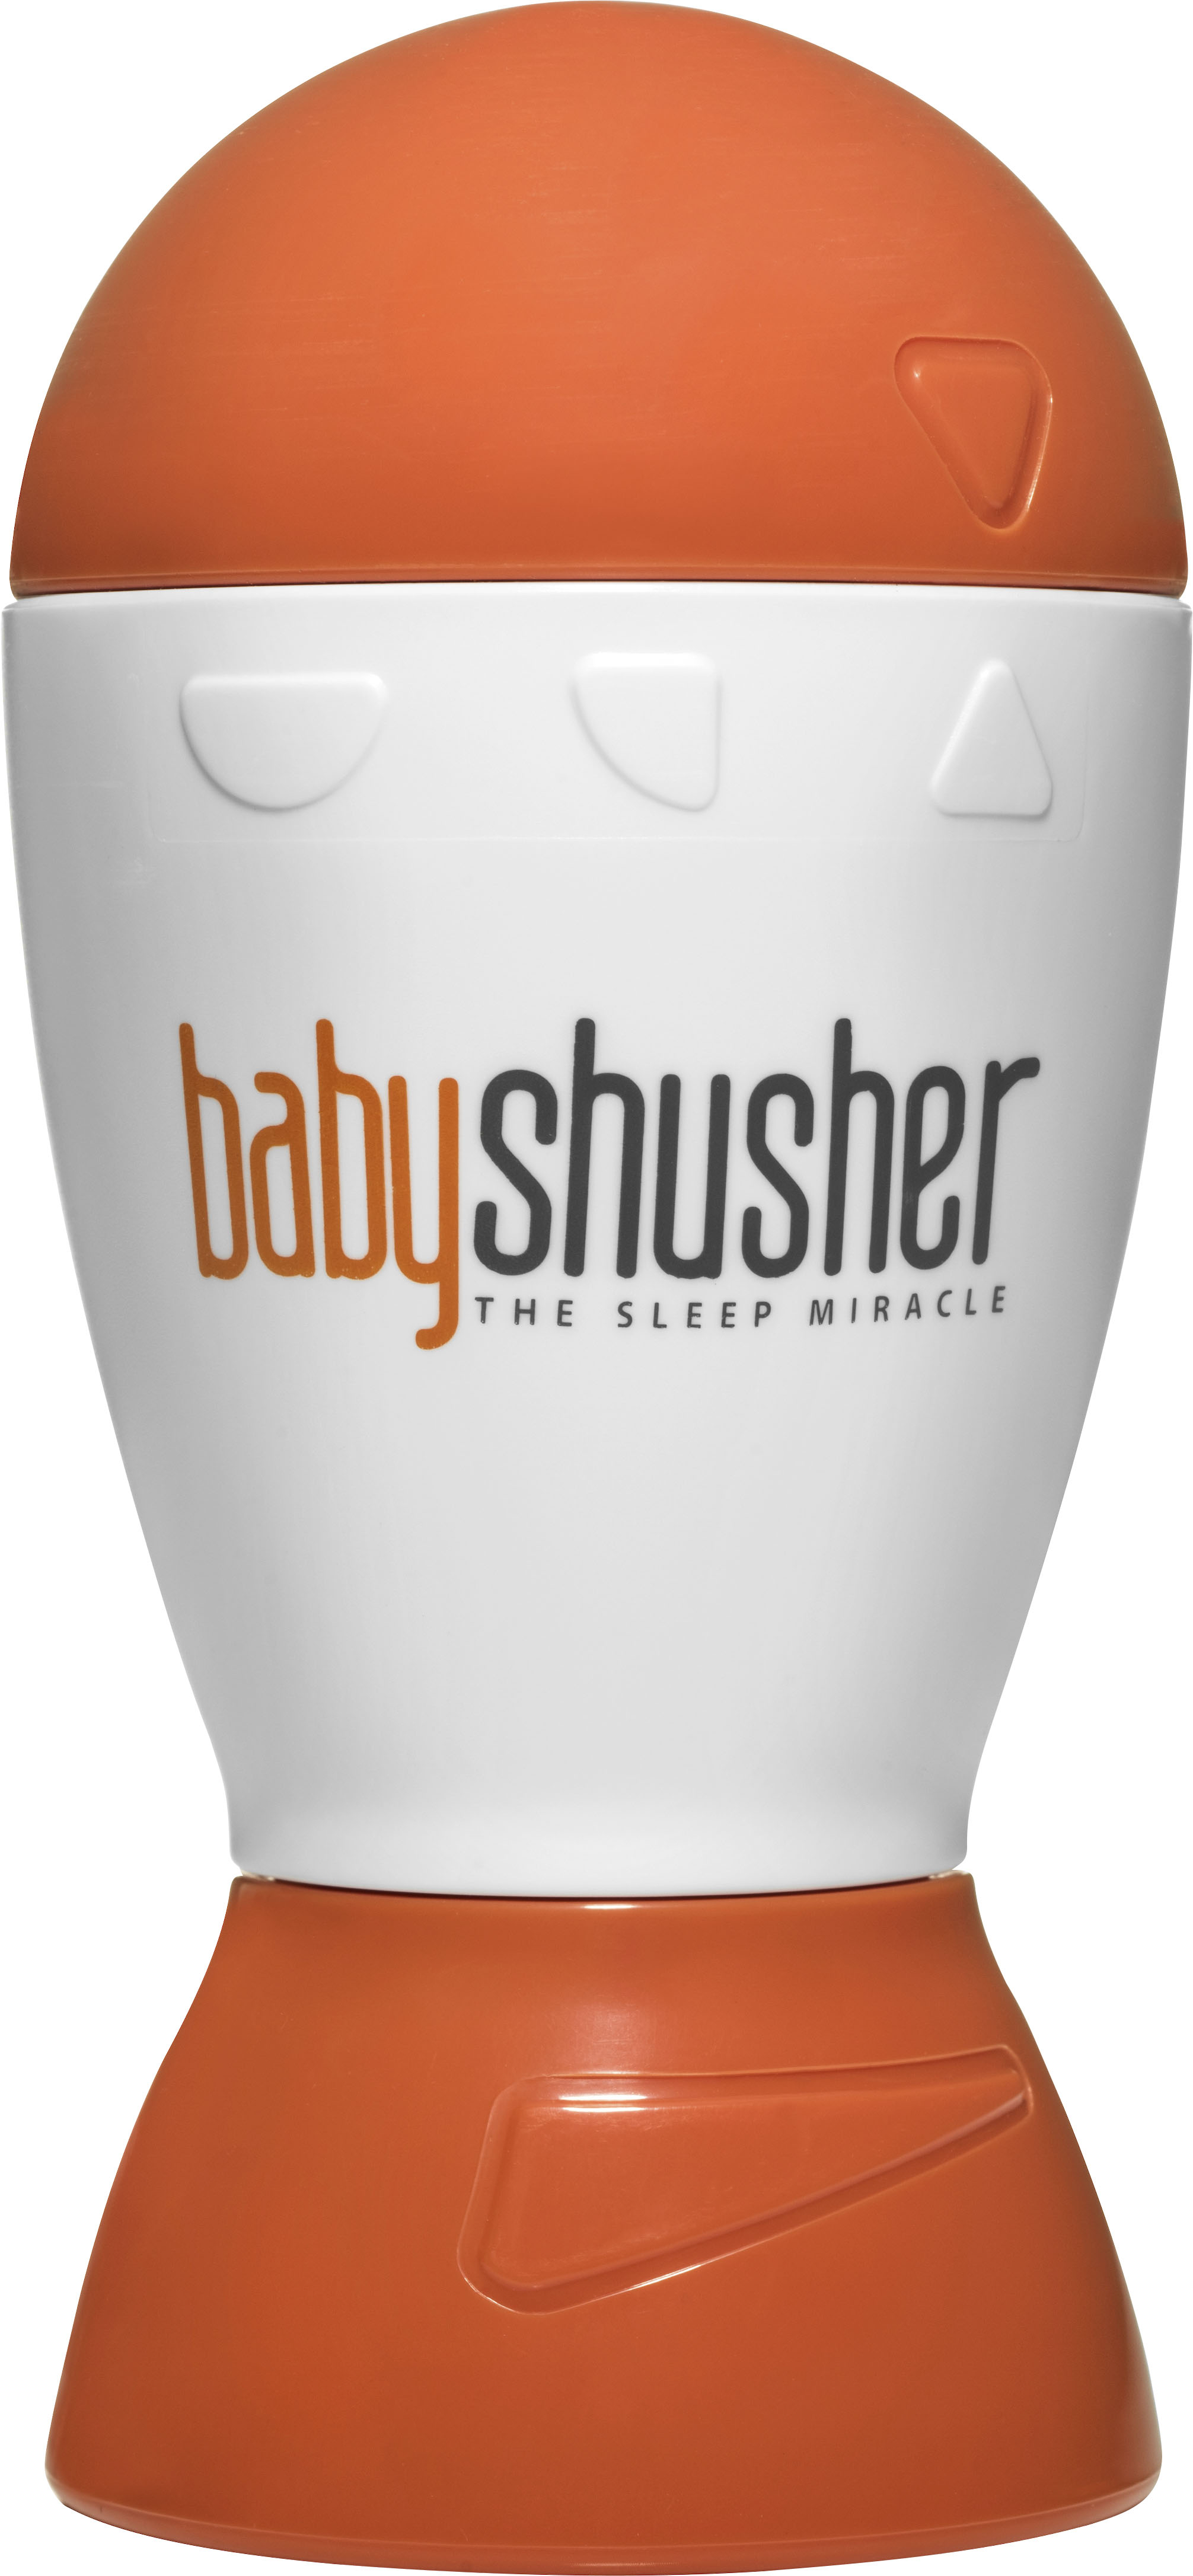 Baby Shusher - Portable Sound Machine & Baby Sleep Soother with Adjustable Timer - Orange